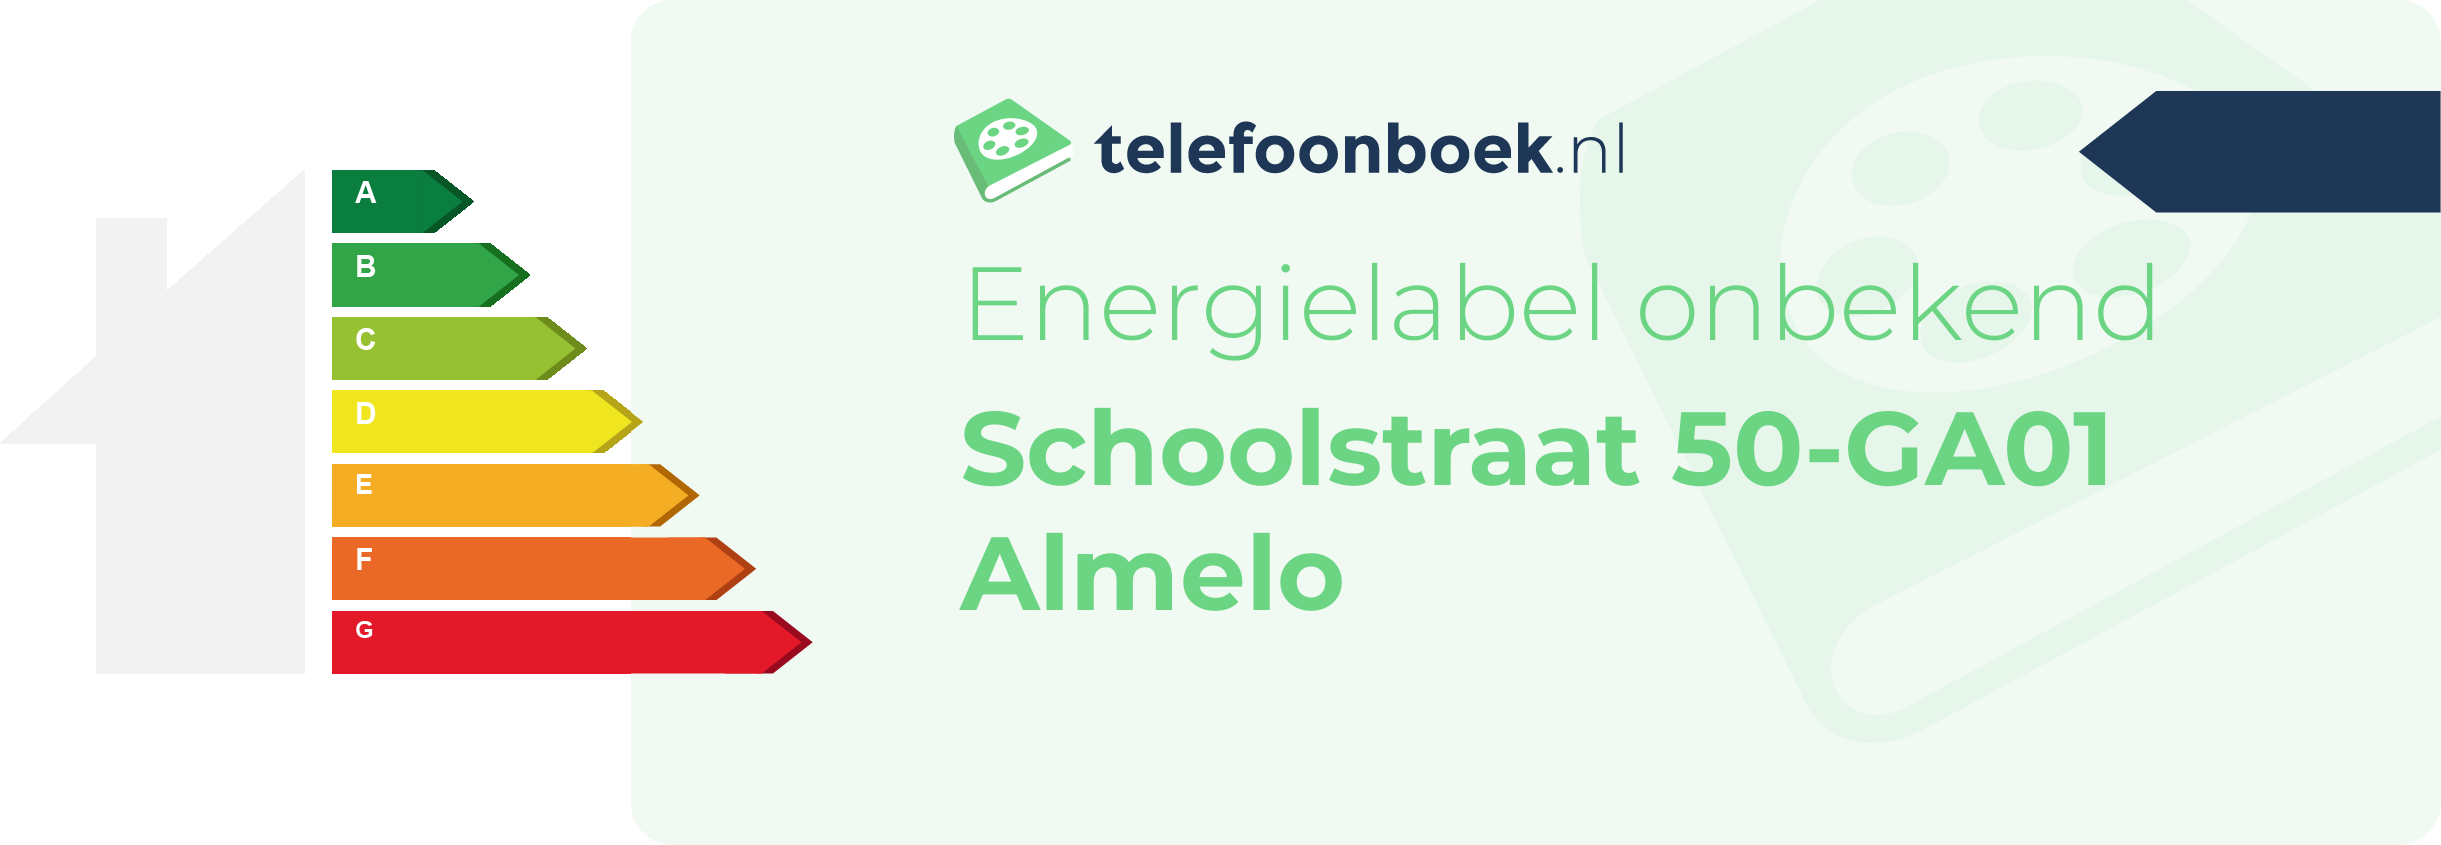 Energielabel Schoolstraat 50-GA01 Almelo